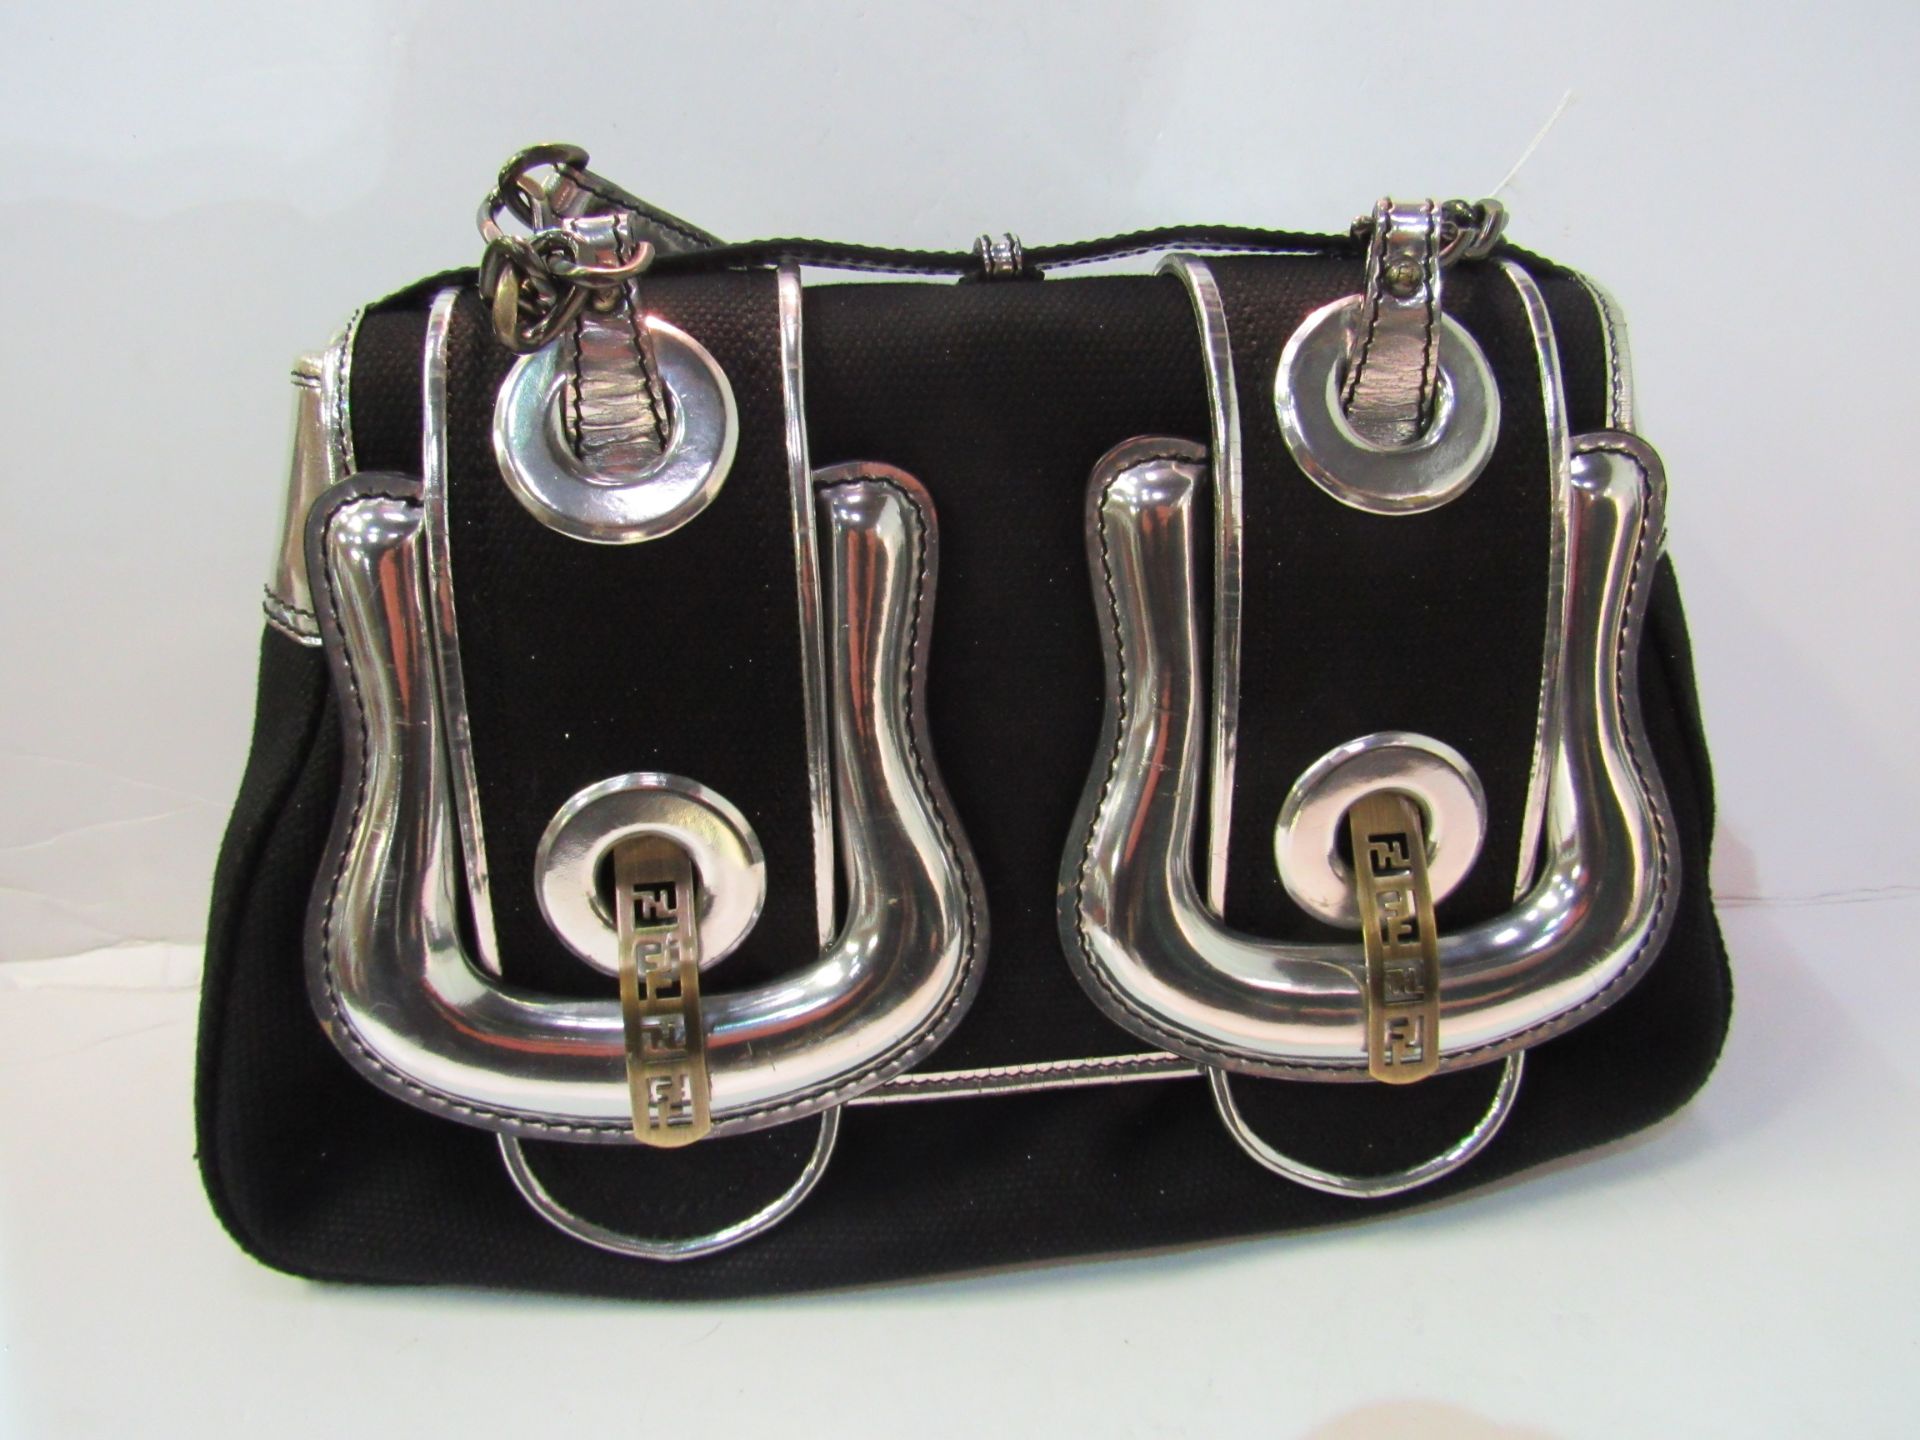 Authentic ""FENDI"" silver trimmed black handbag in dustbag. Estimate £40-60.